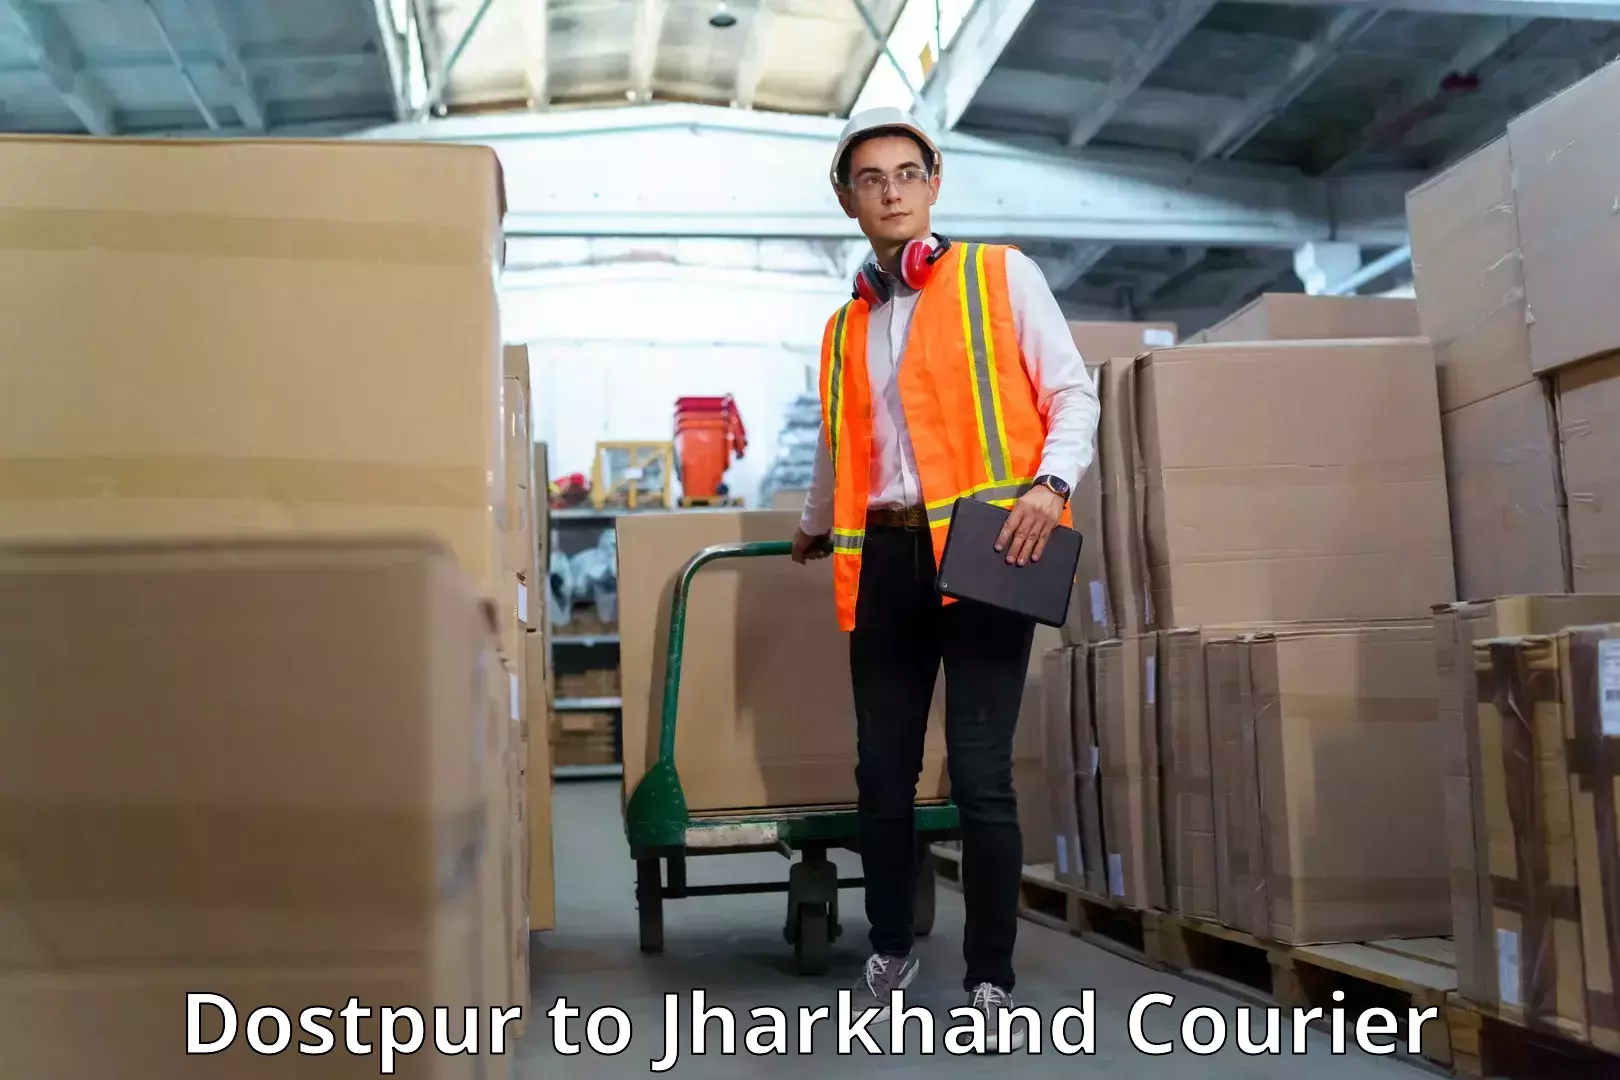 Professional courier handling Dostpur to Jamshedpur